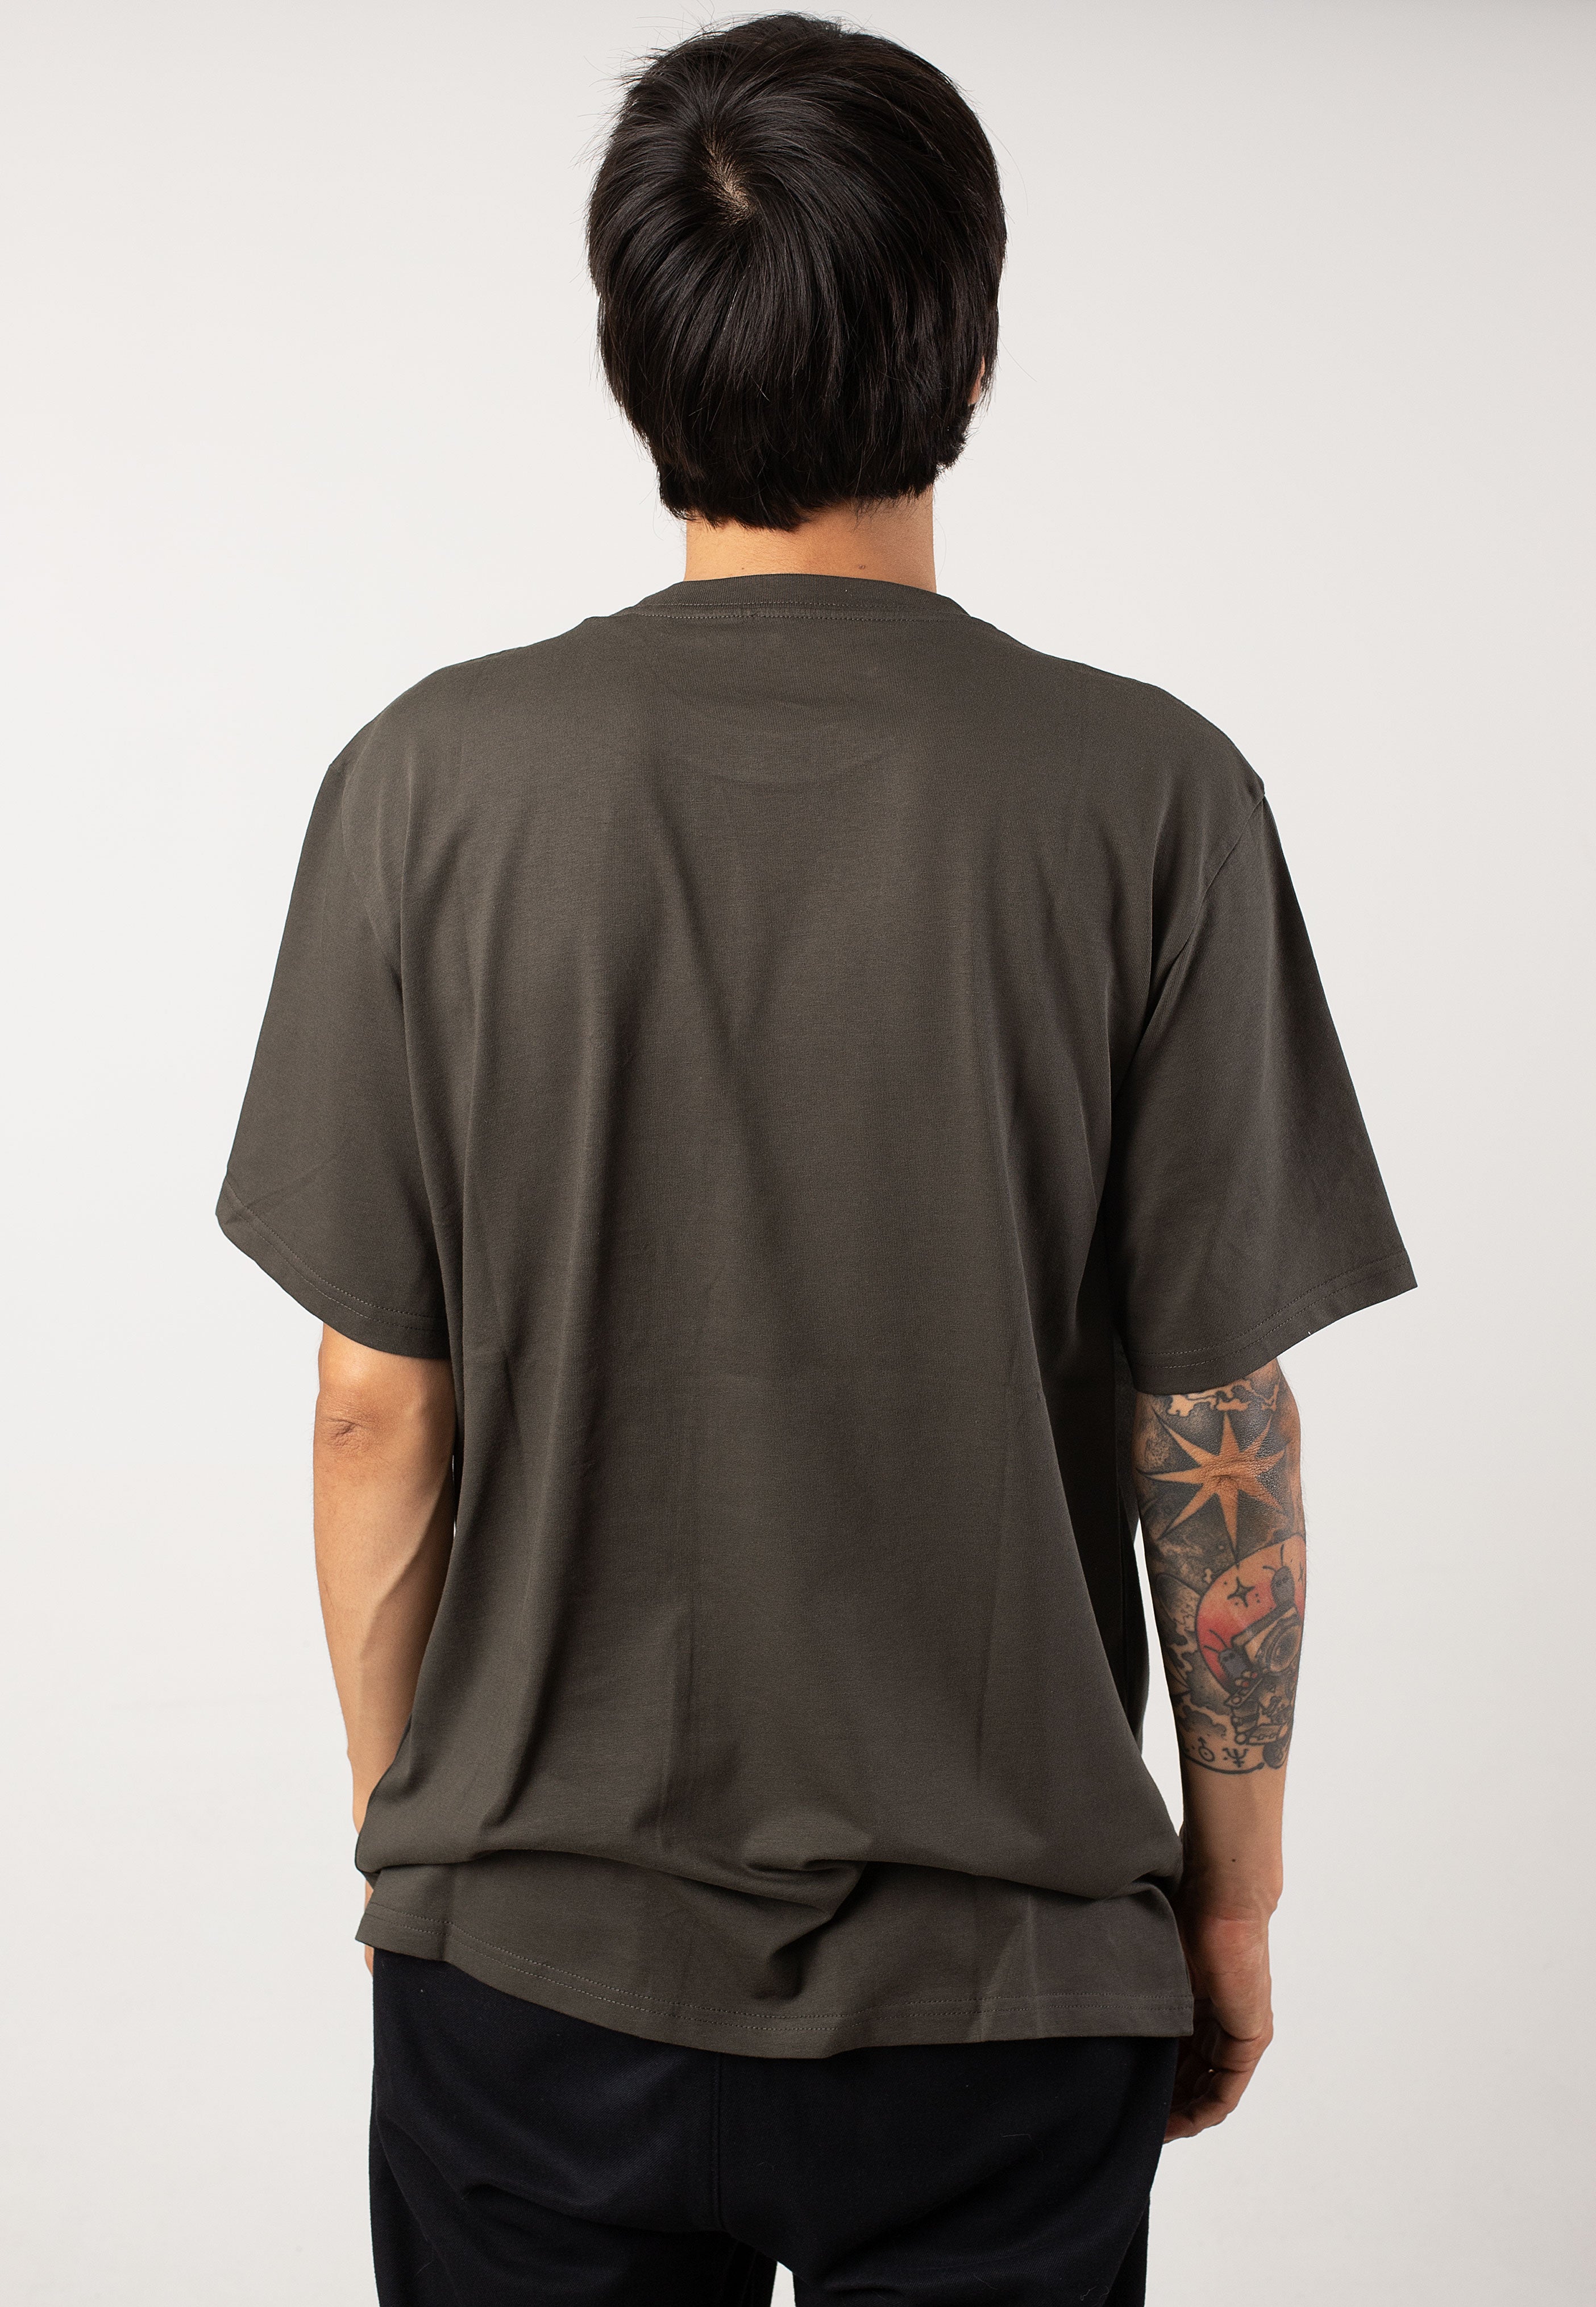 Carhartt WIP - Pocket Mirage - T-Shirt | Men-Image